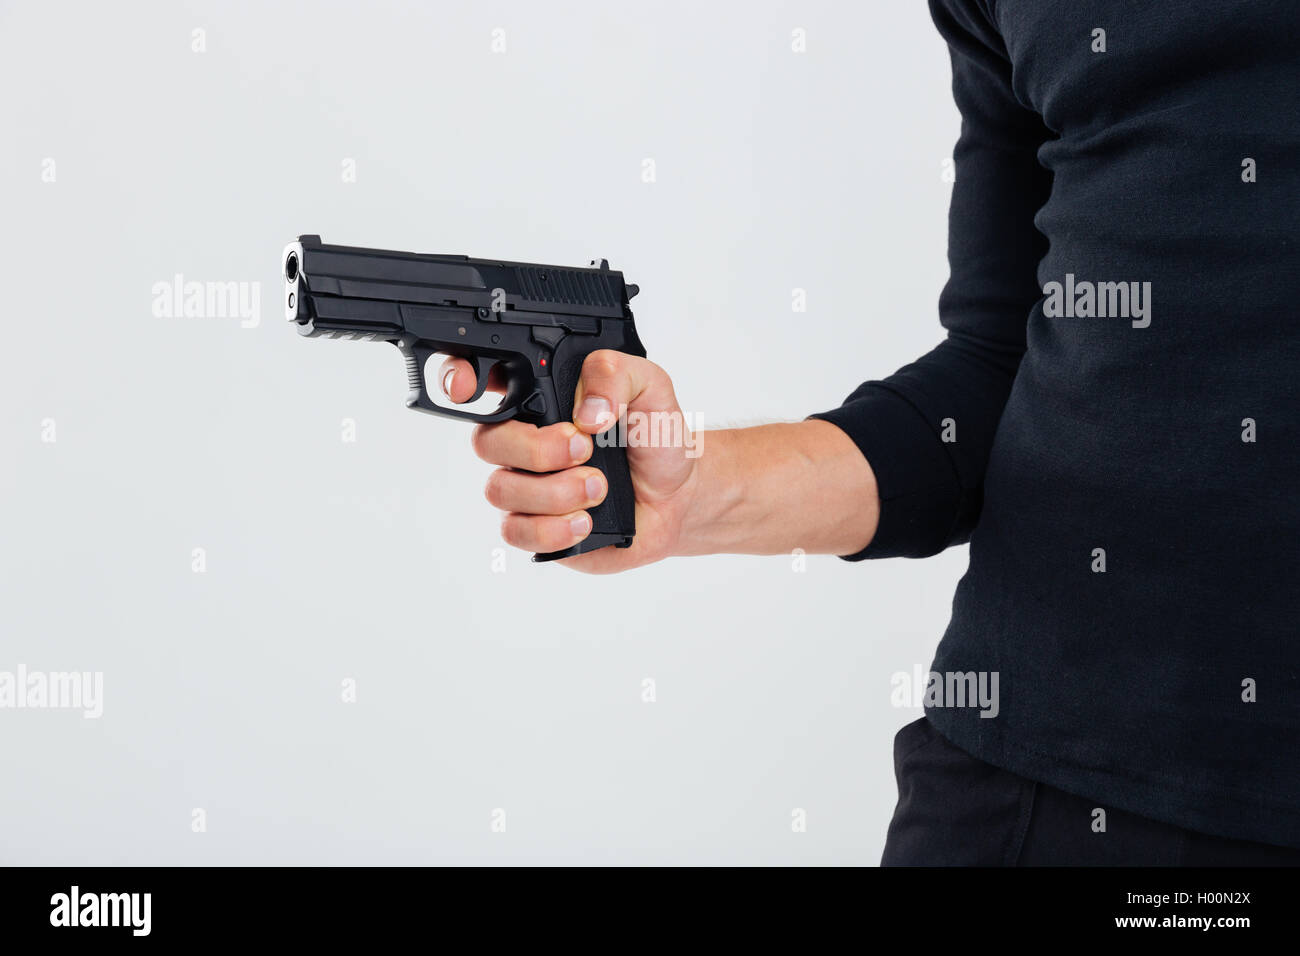 Closeup of man in black clothes holding a gun Stock Photo